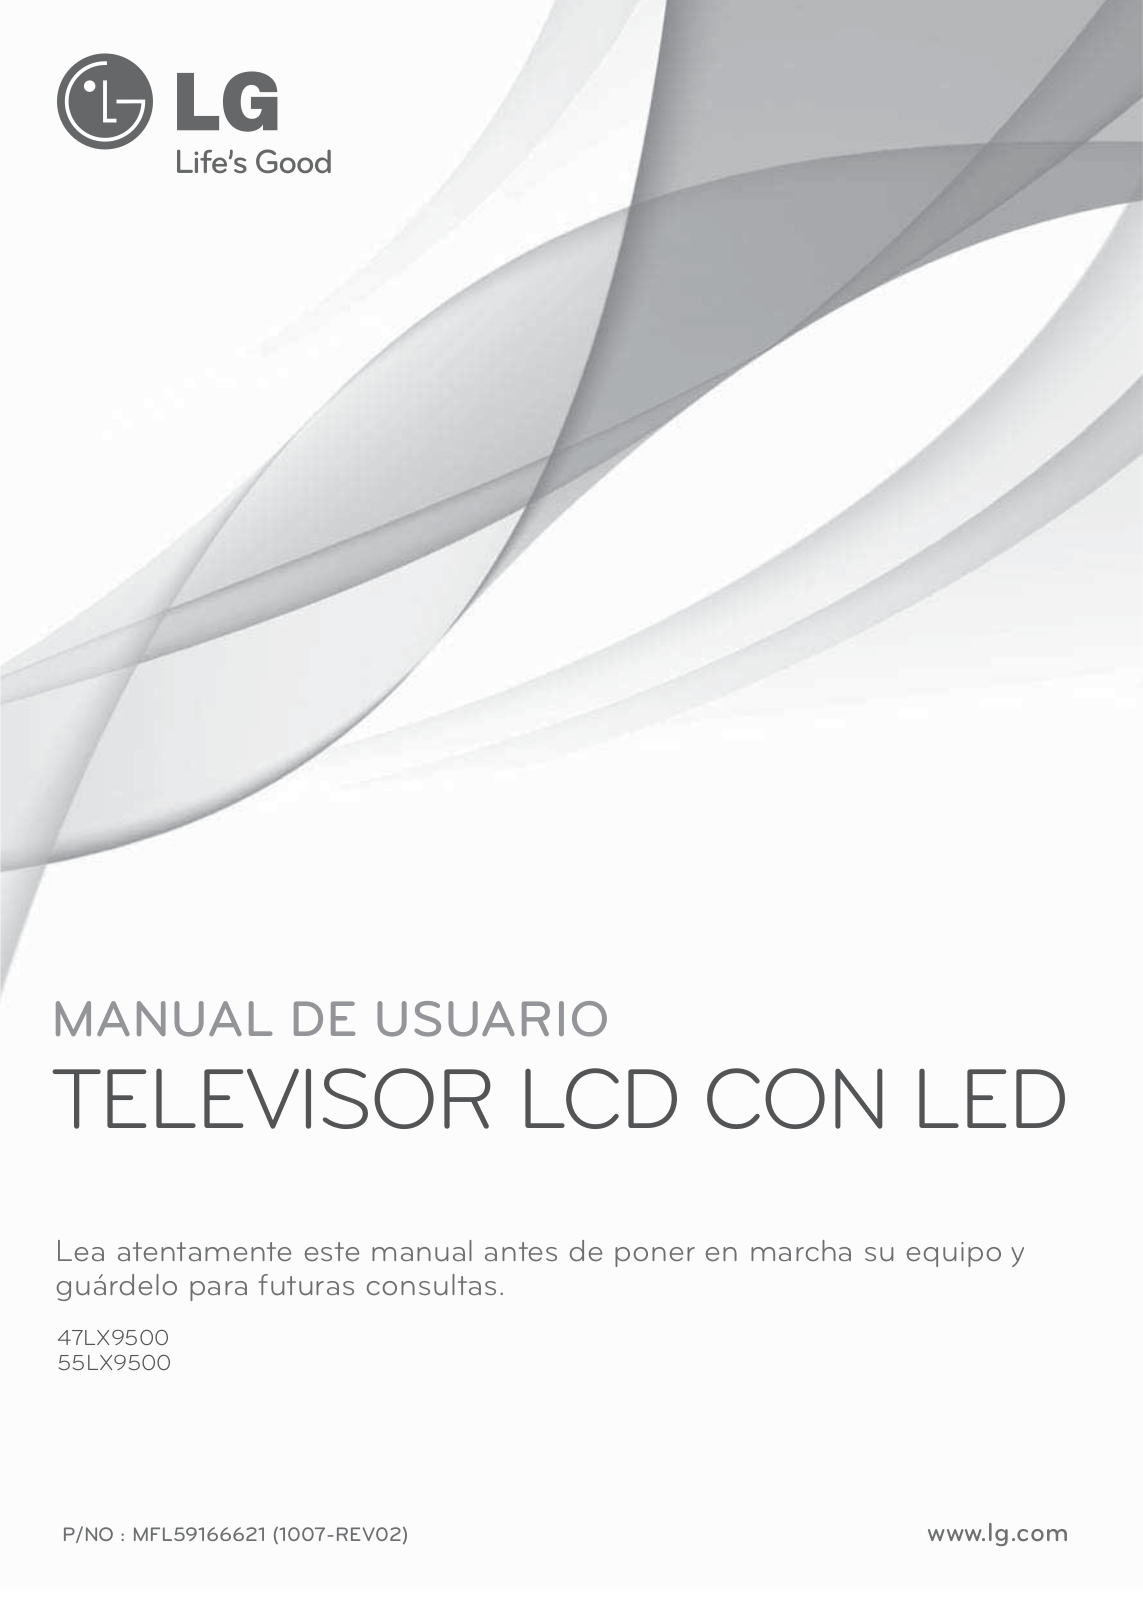 LG 47LX9500 user manuals